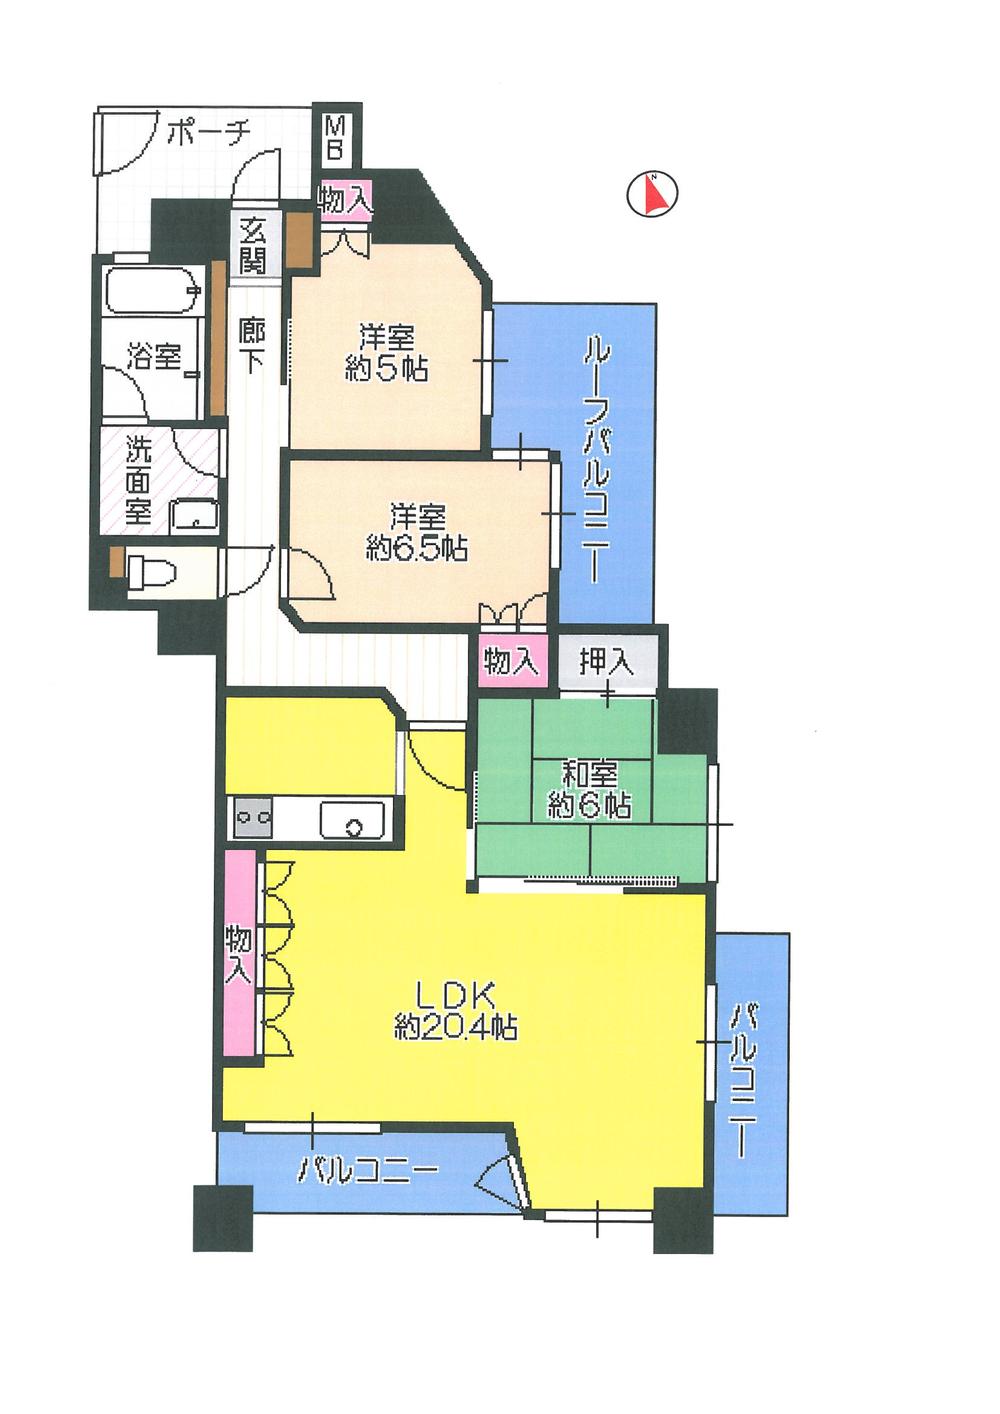 Floor plan. 3LDK, Price 21.9 million yen, Occupied area 86.86 sq m , Balcony area 11.71 sq m